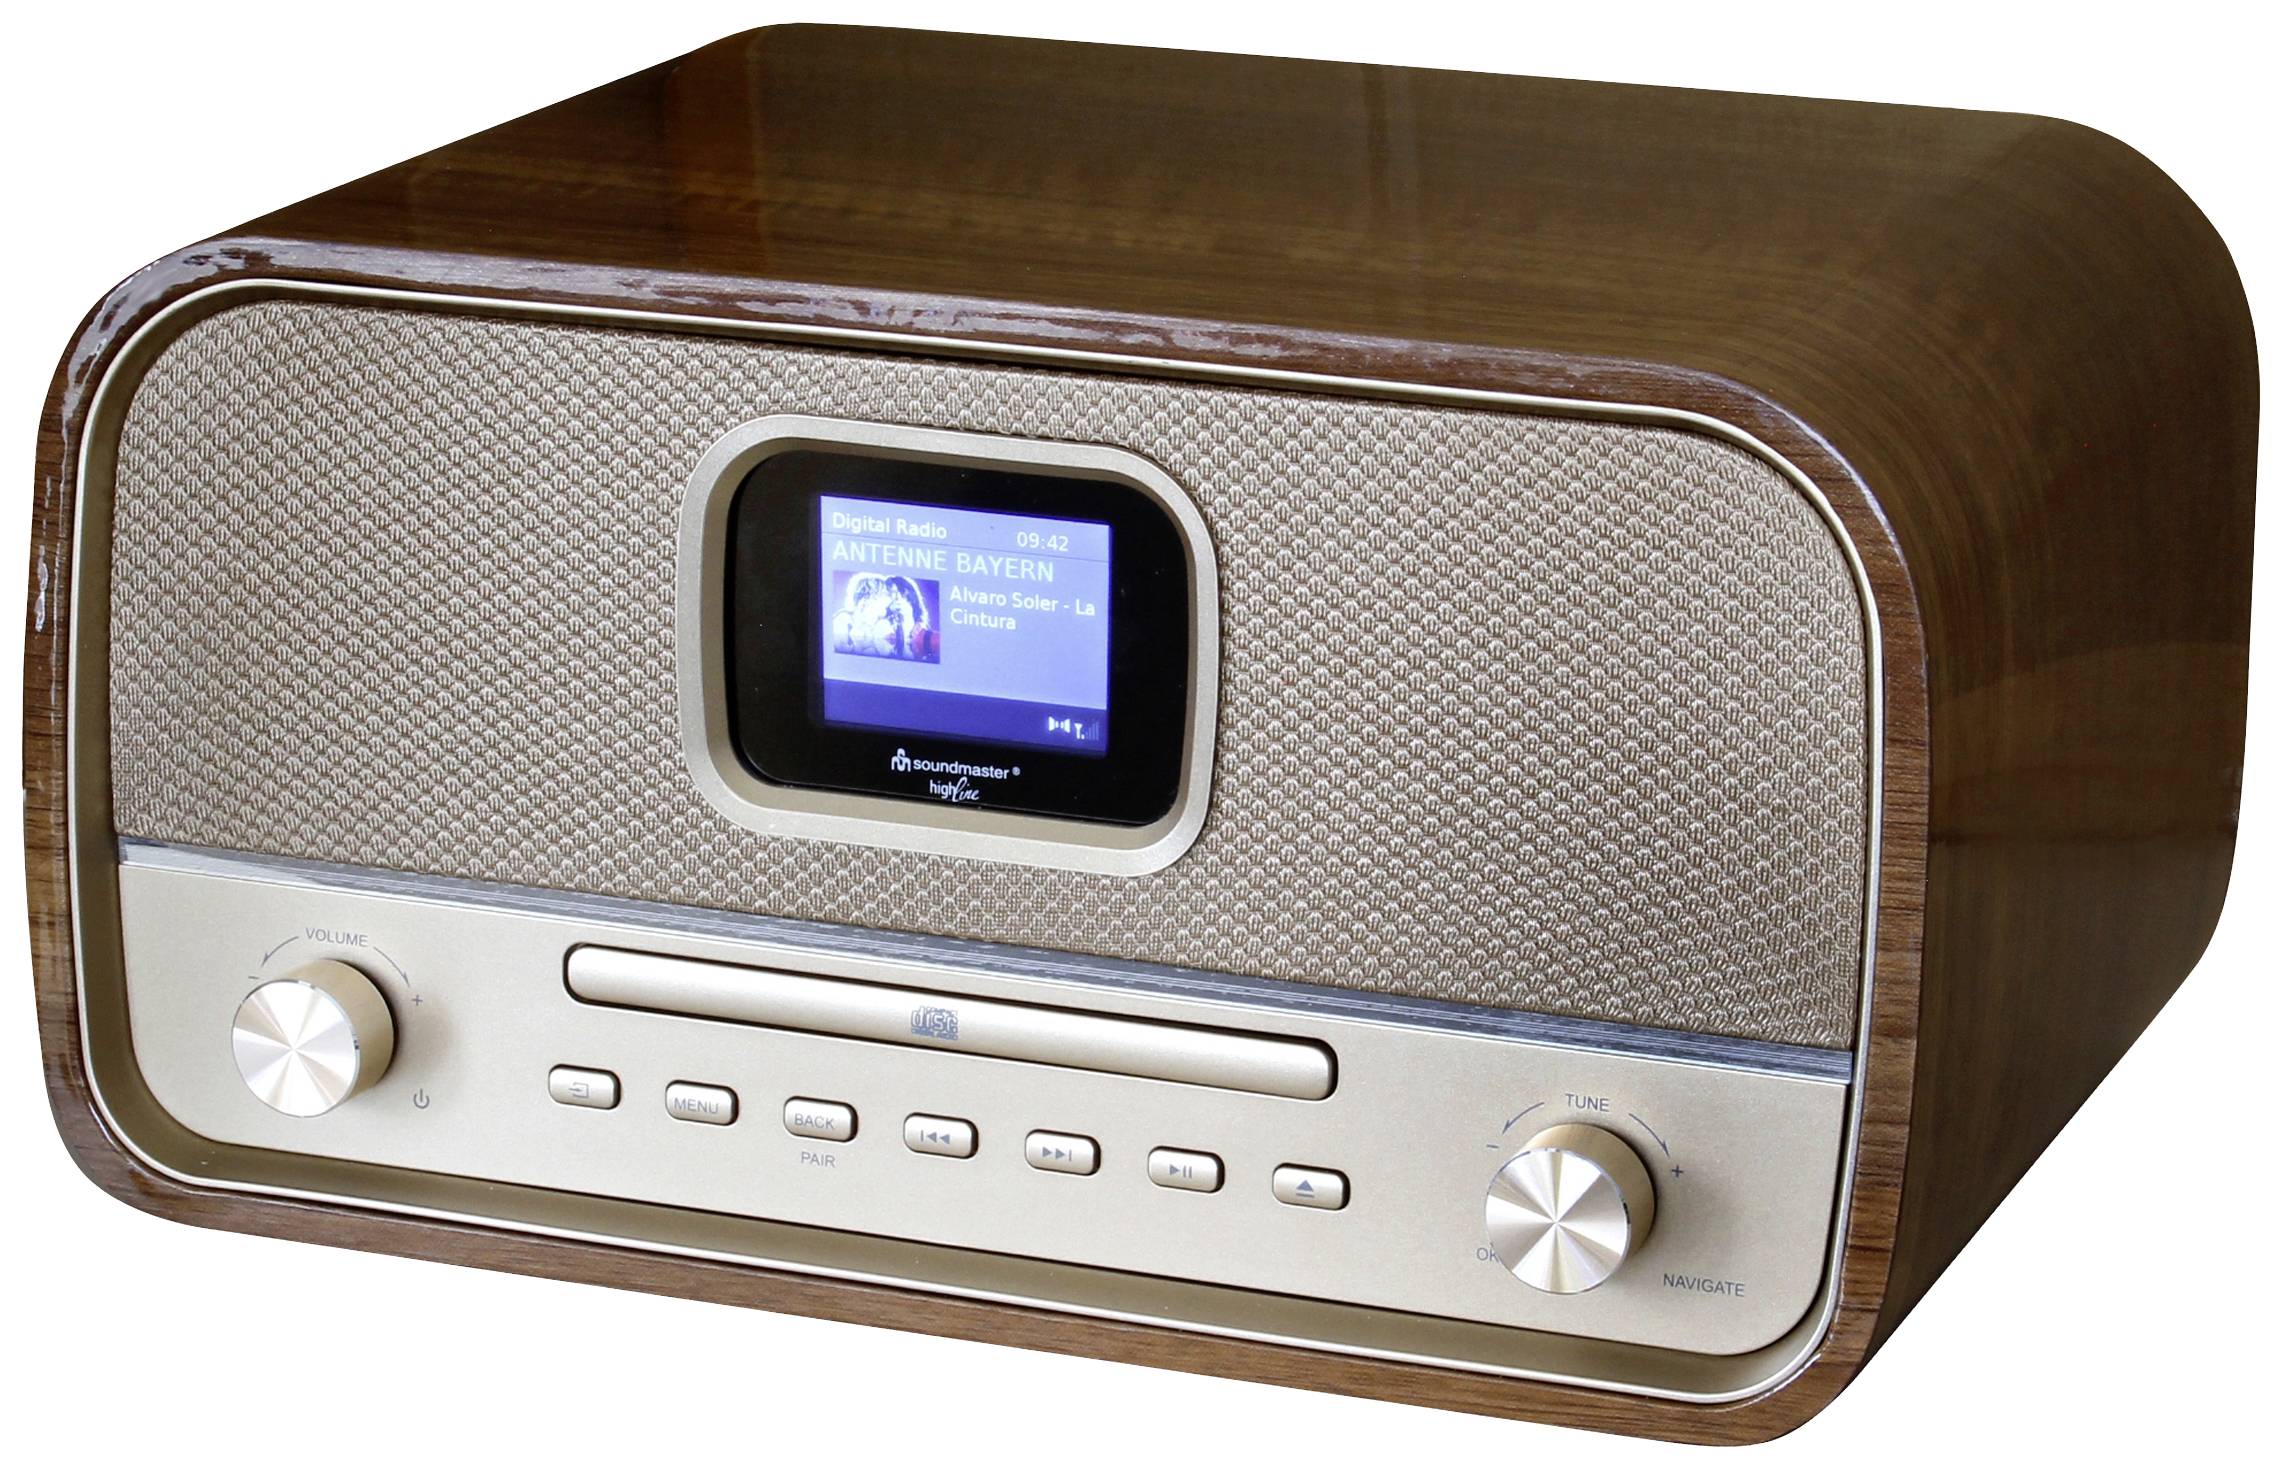 soundmaster DAB970BR1 Desk radio FM AUX, Bluetooth, CD, USB Battery charger, Incl. remote control, Alarm clock Br | Conrad.com